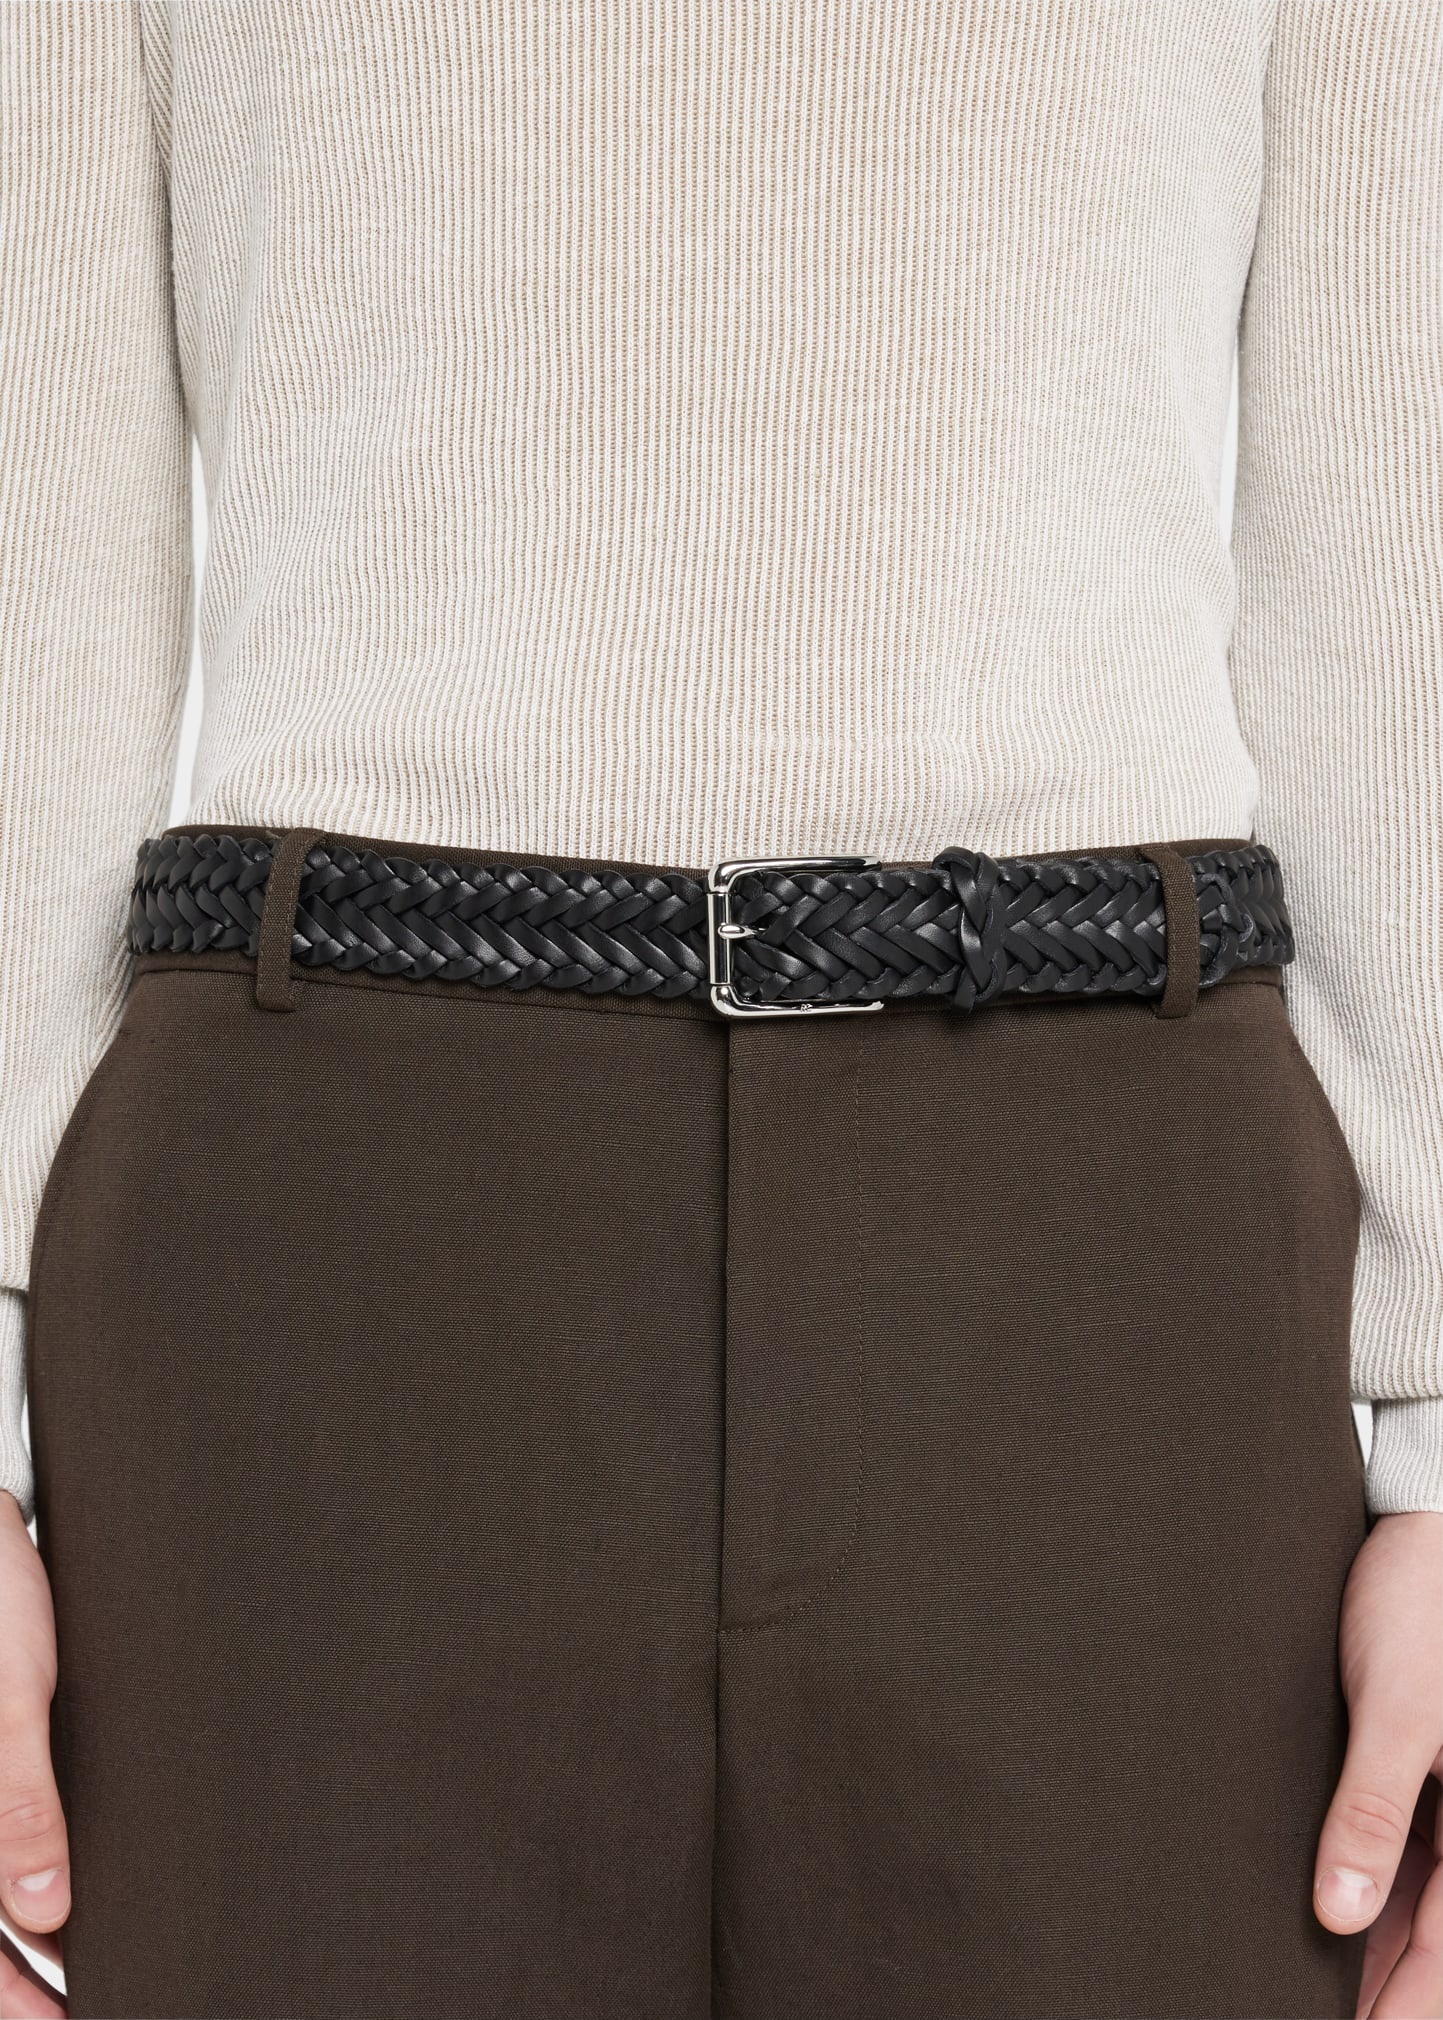 Men's Braided Leather Belt, 32mm - 2